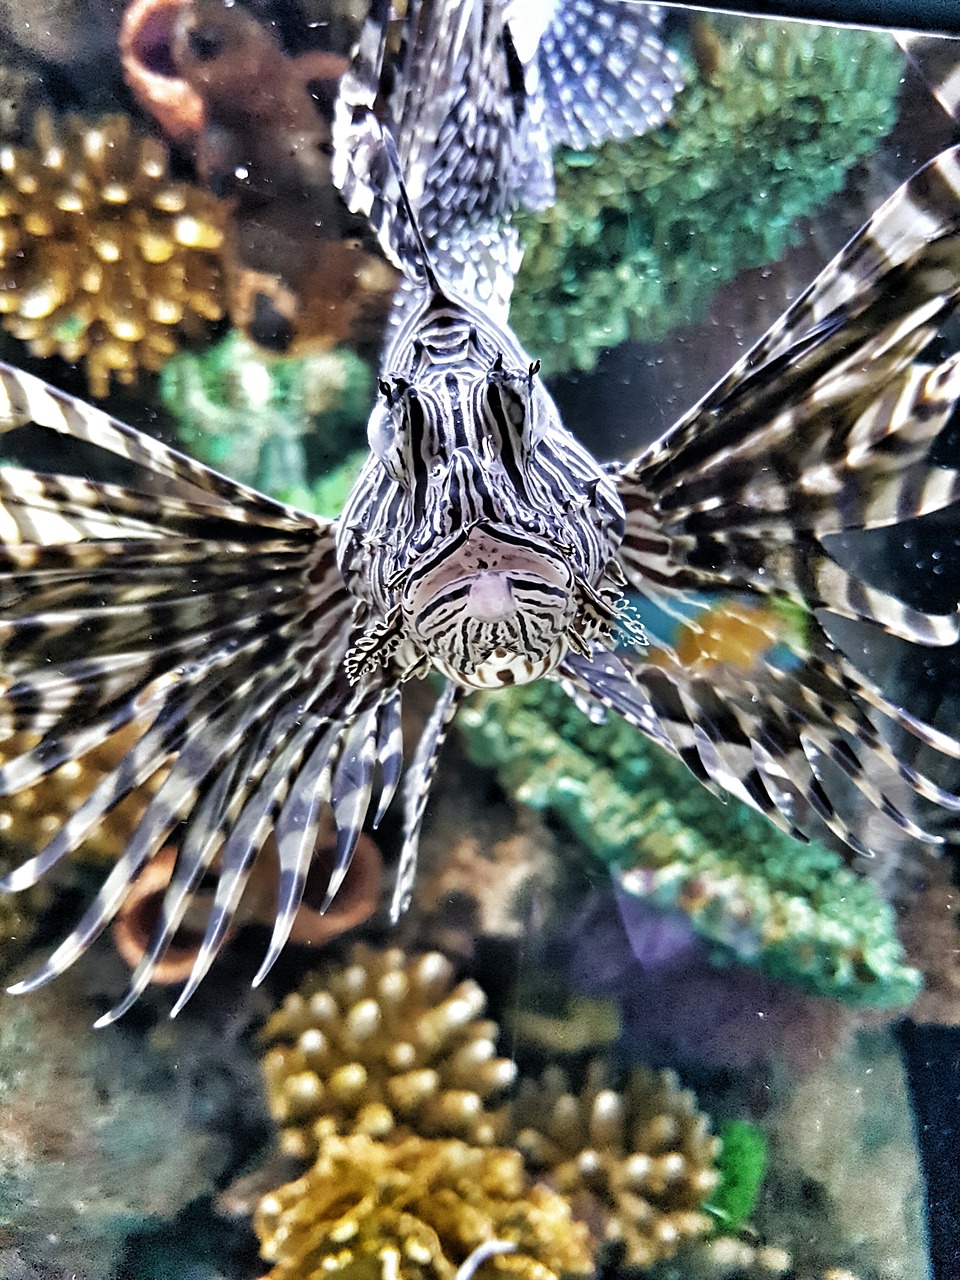 Image - lionfish poisonous nature animal